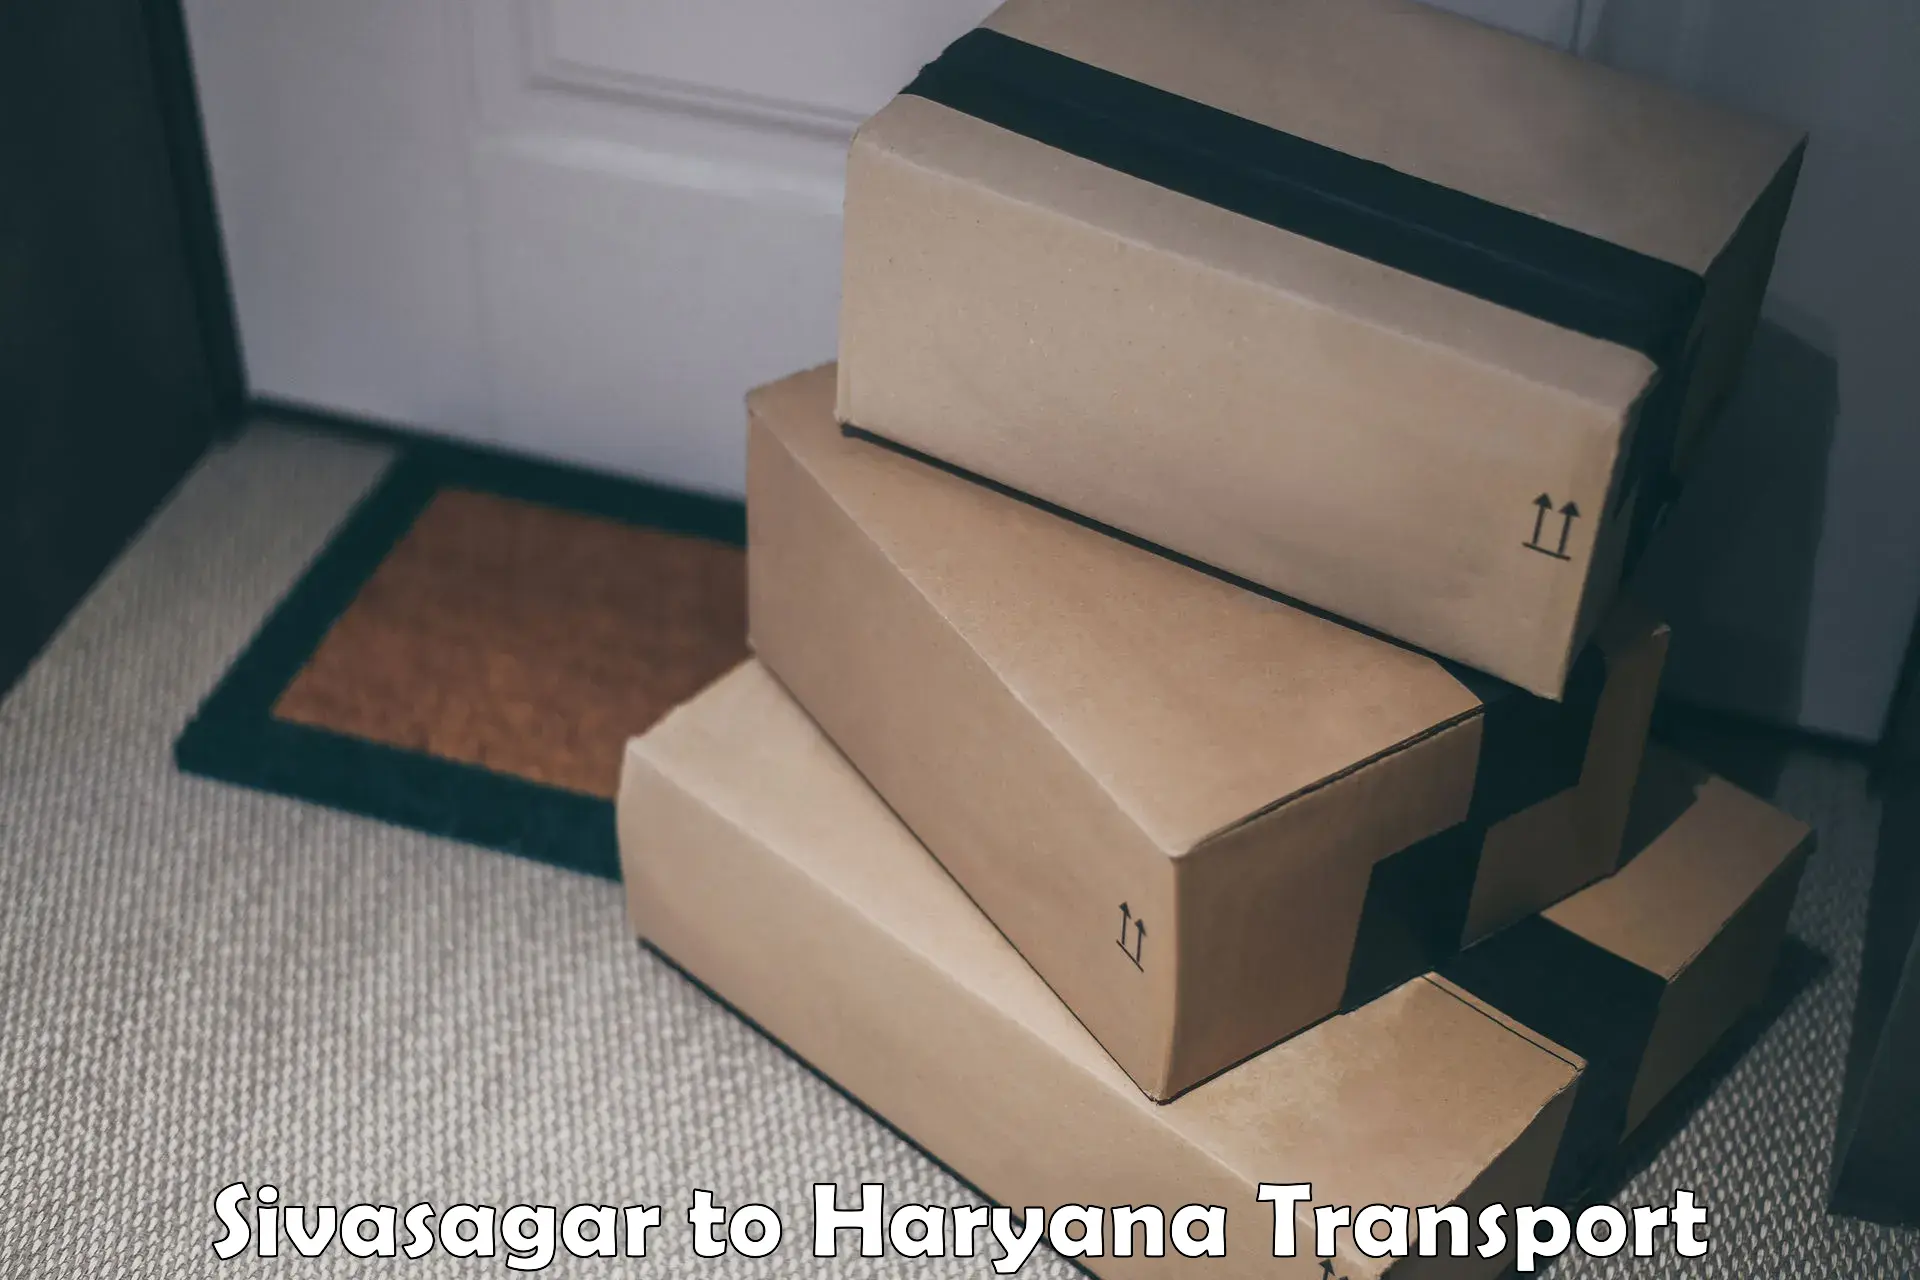 Shipping partner Sivasagar to Haryana